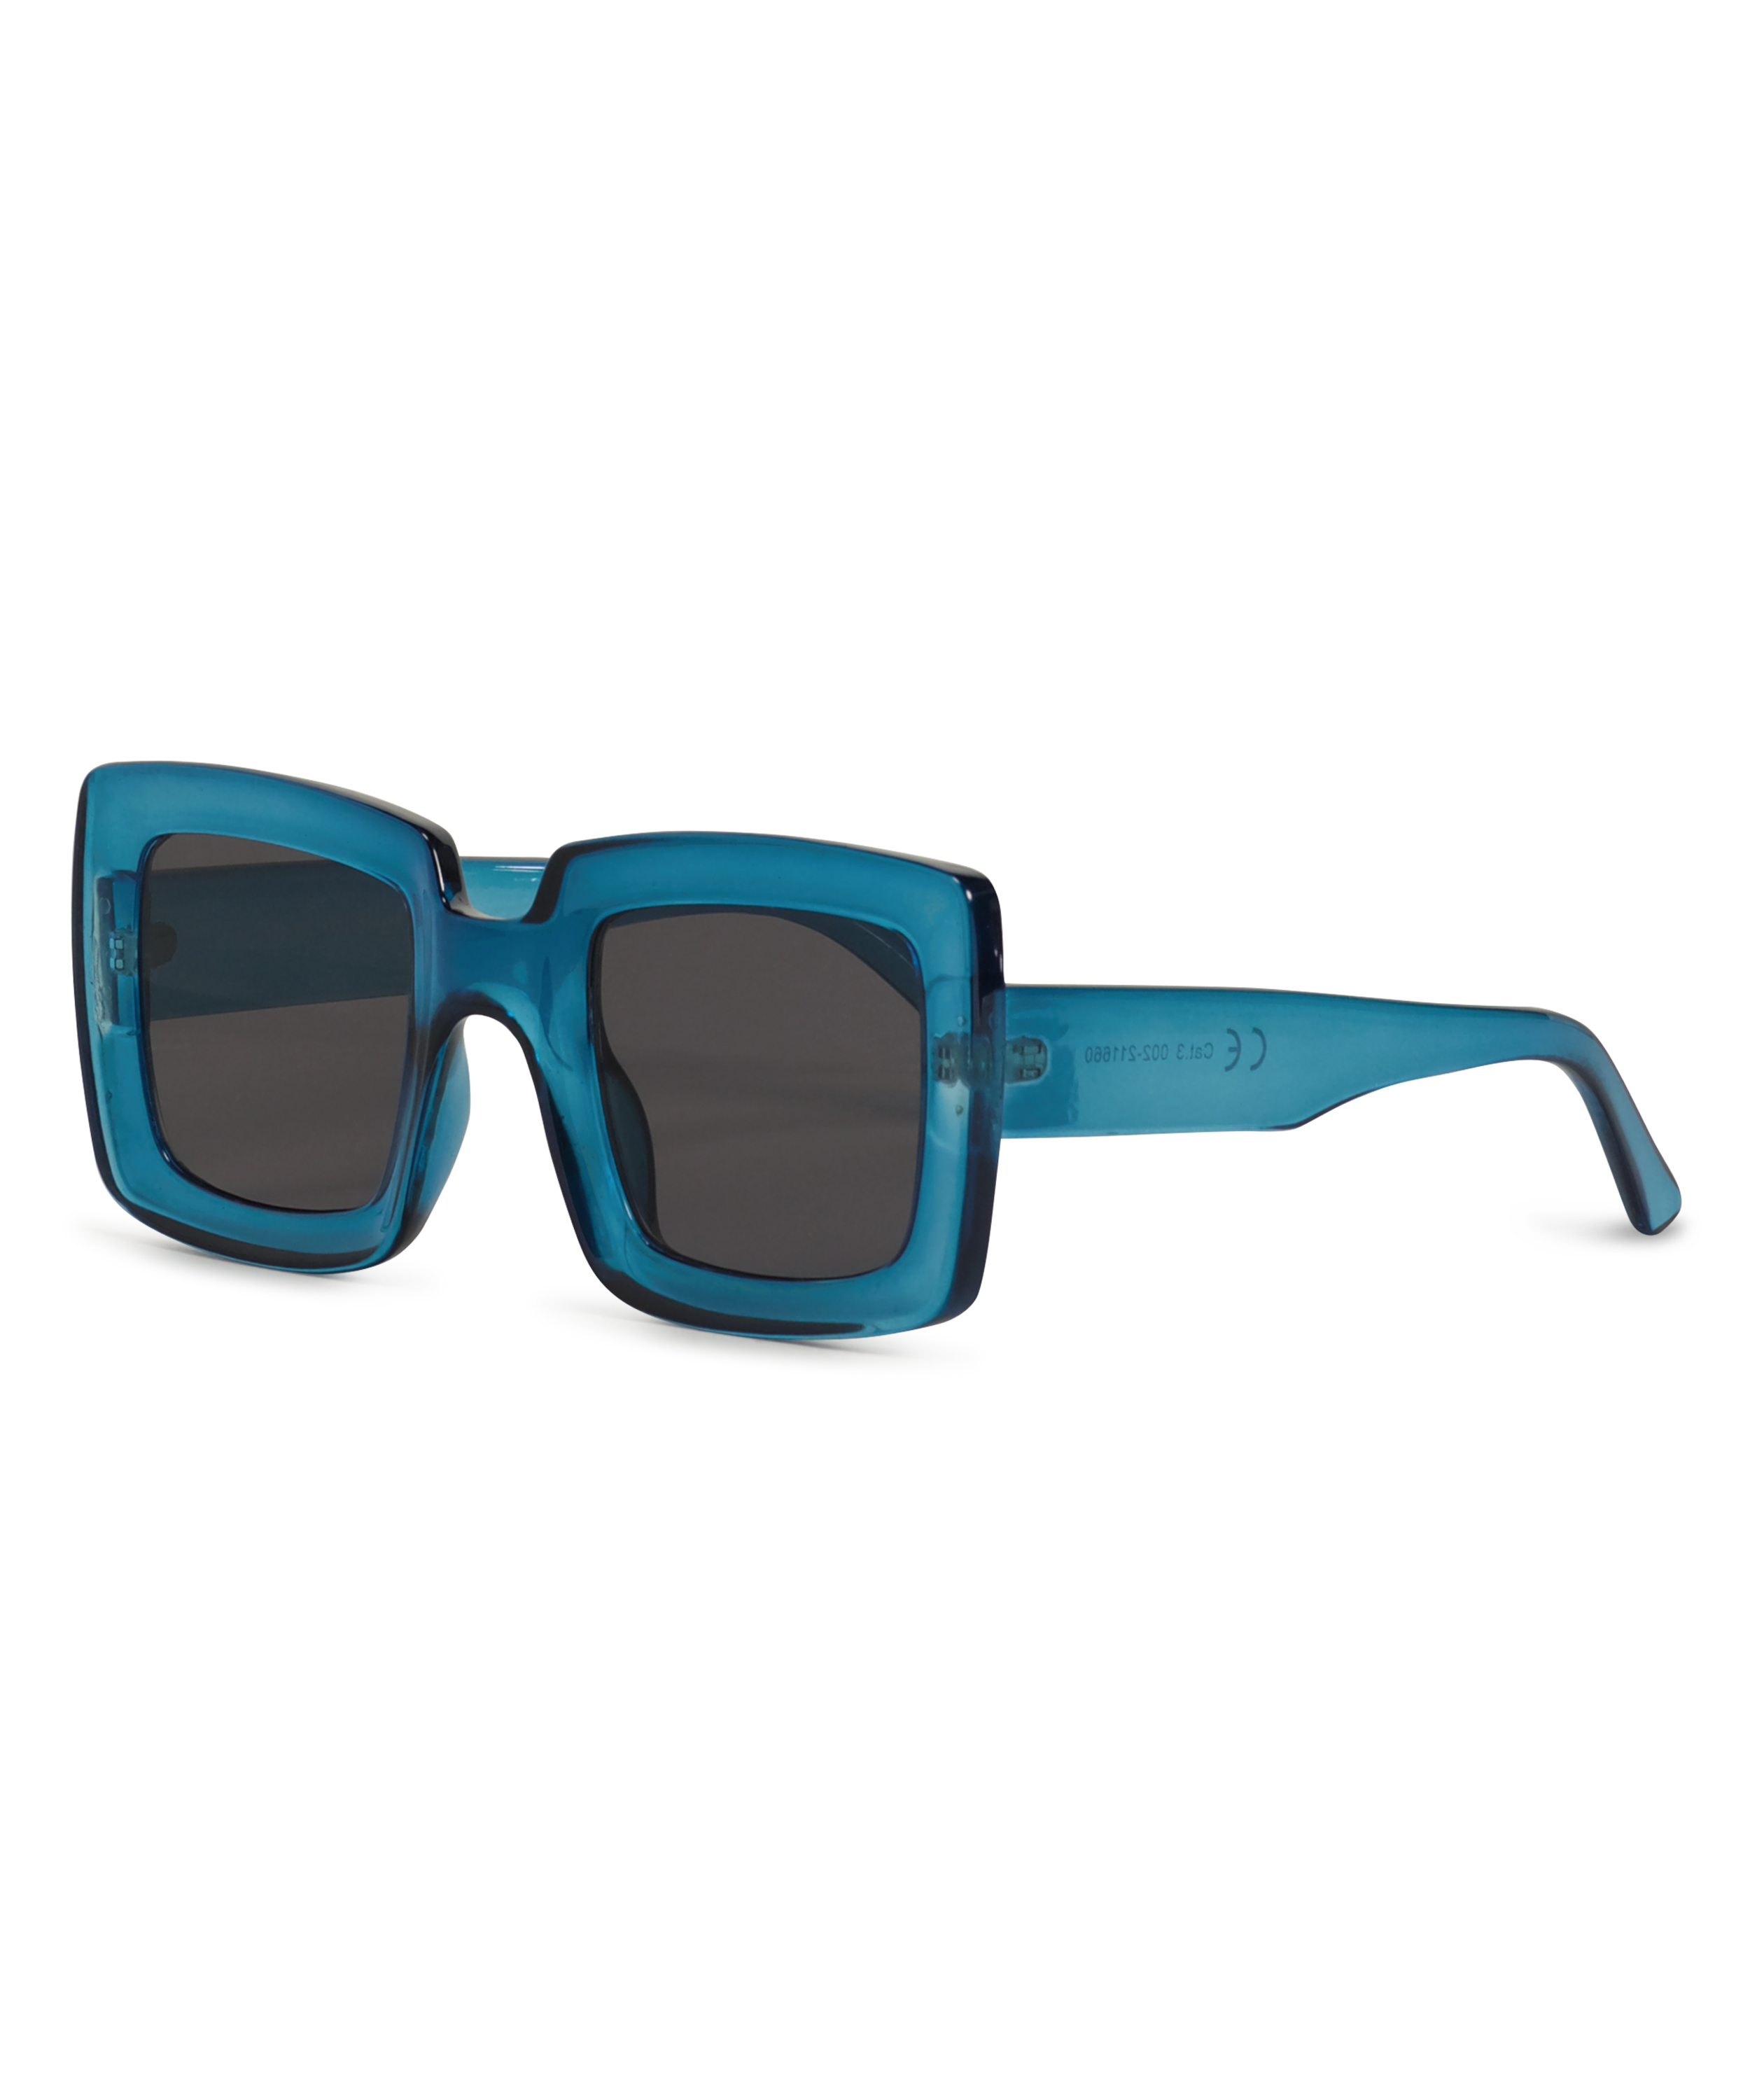 Sunglasses, Blue, main